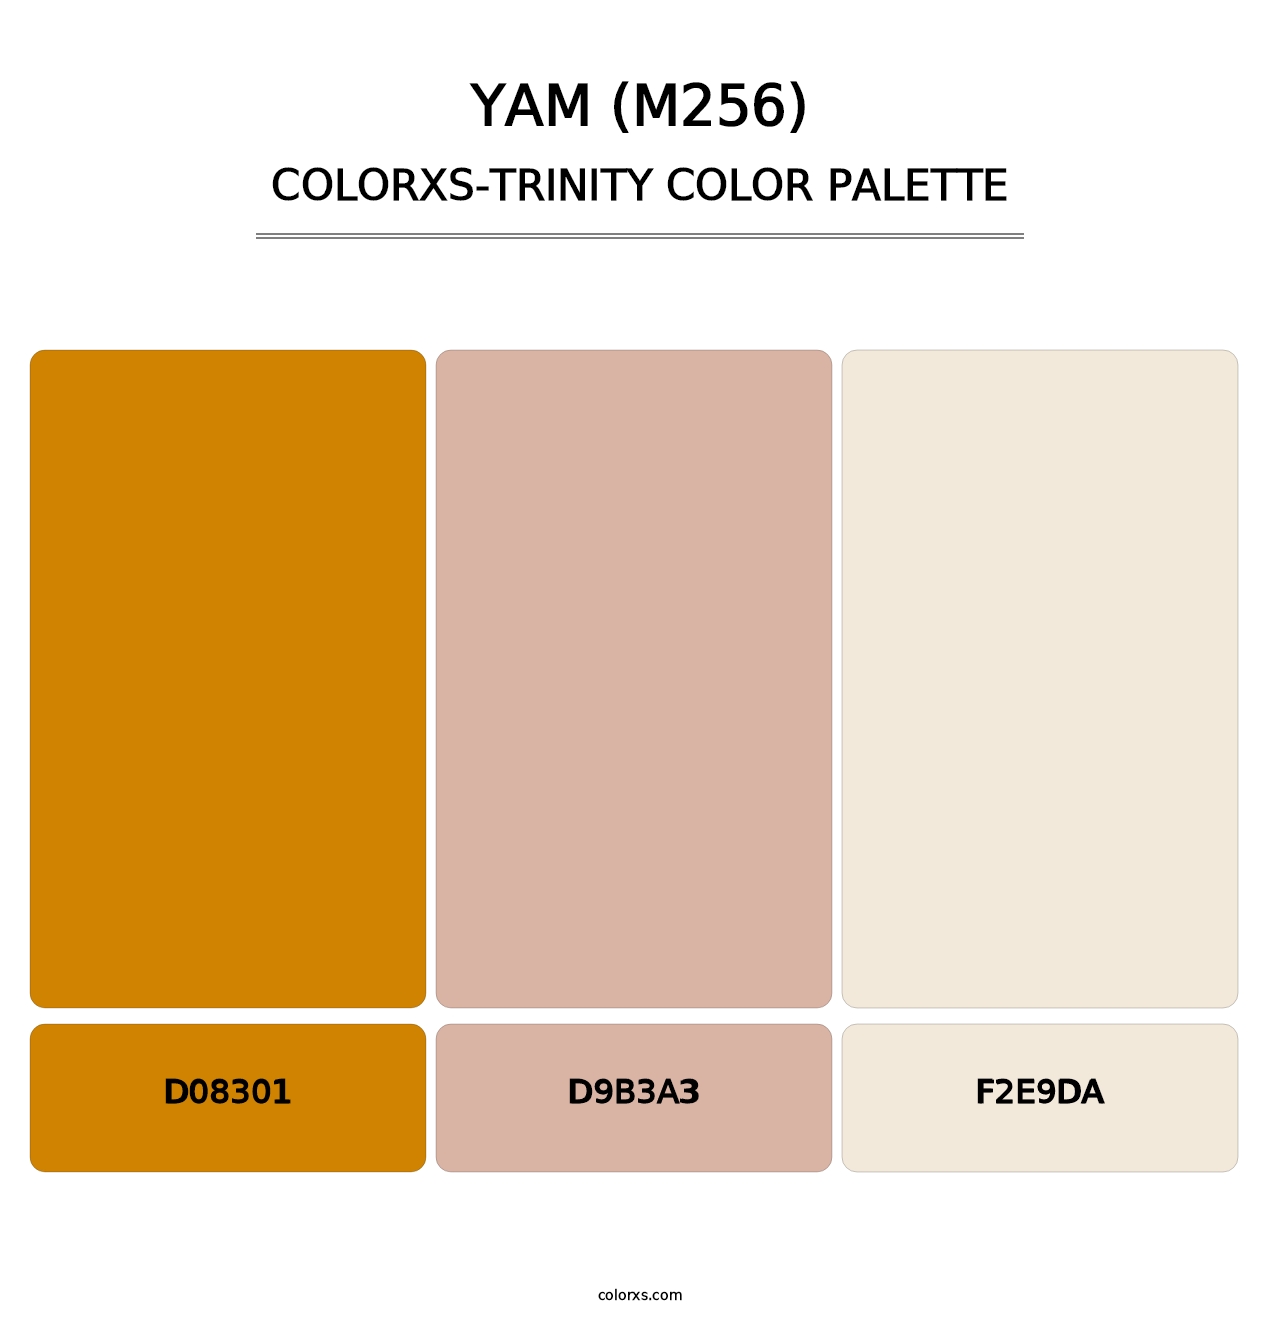 Yam (M256) - Colorxs Trinity Palette